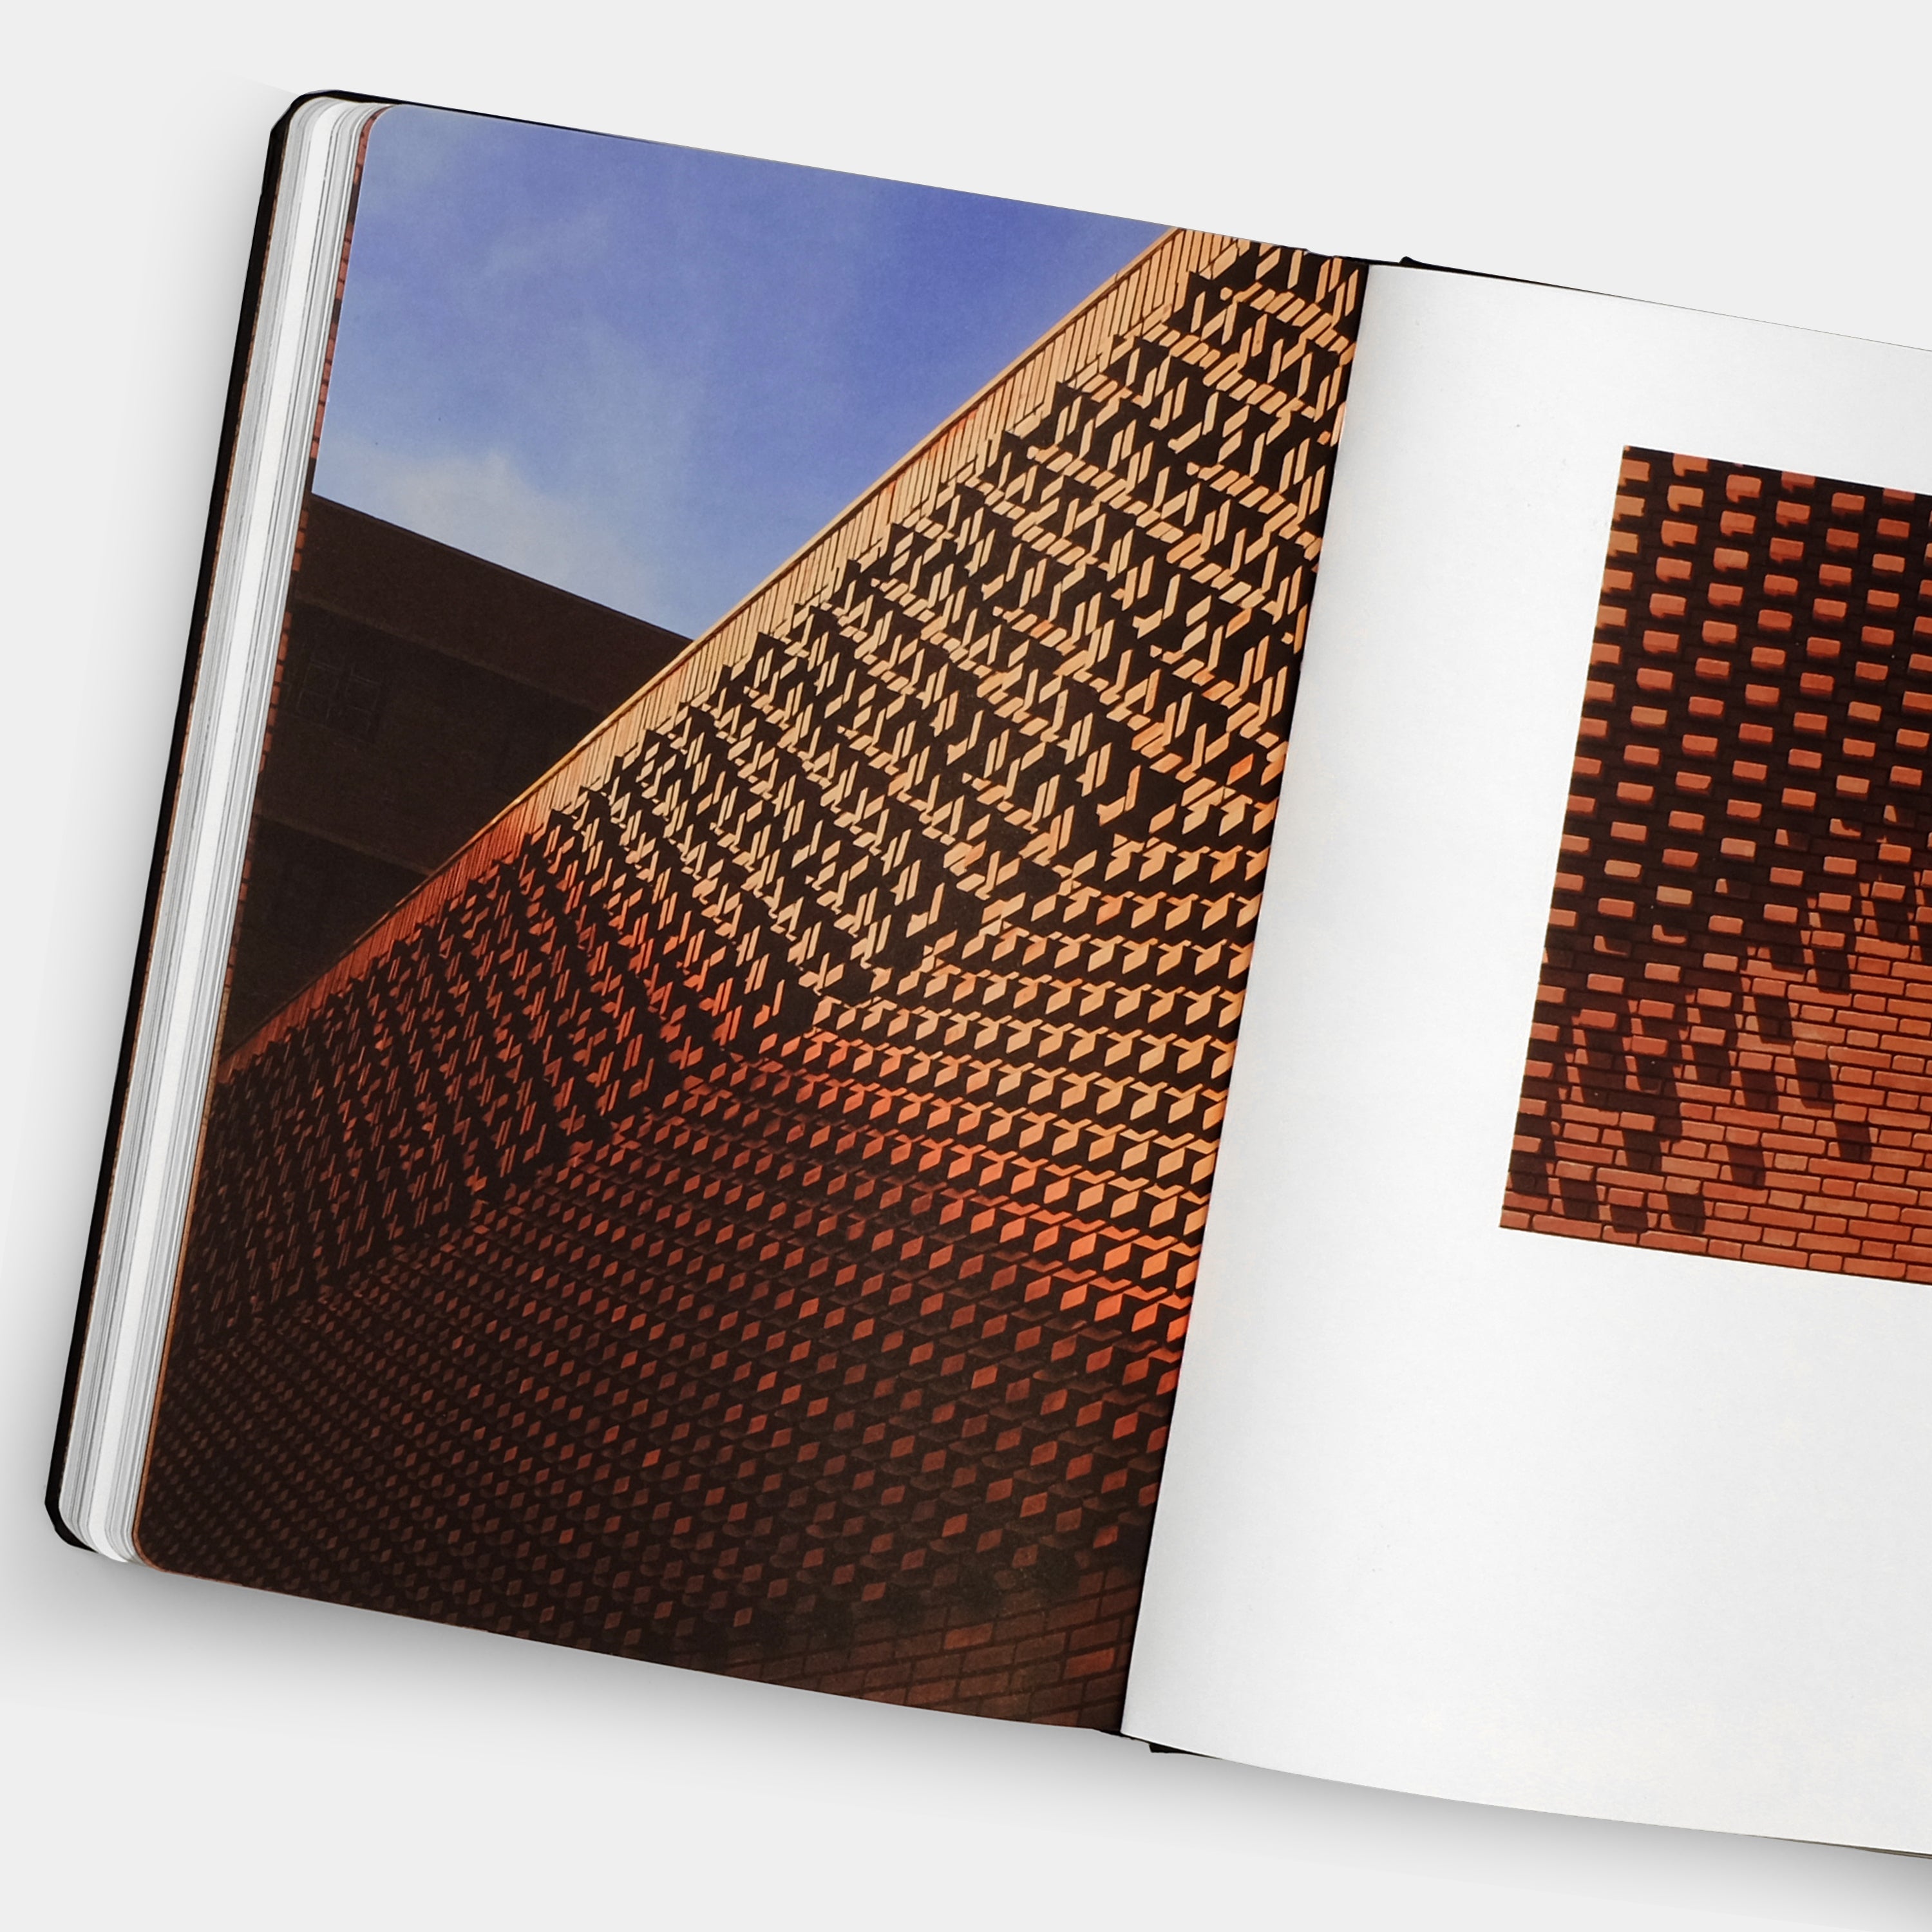 Yves Saint Laurent Museum Marrakech by Studio KO Phaidon Book